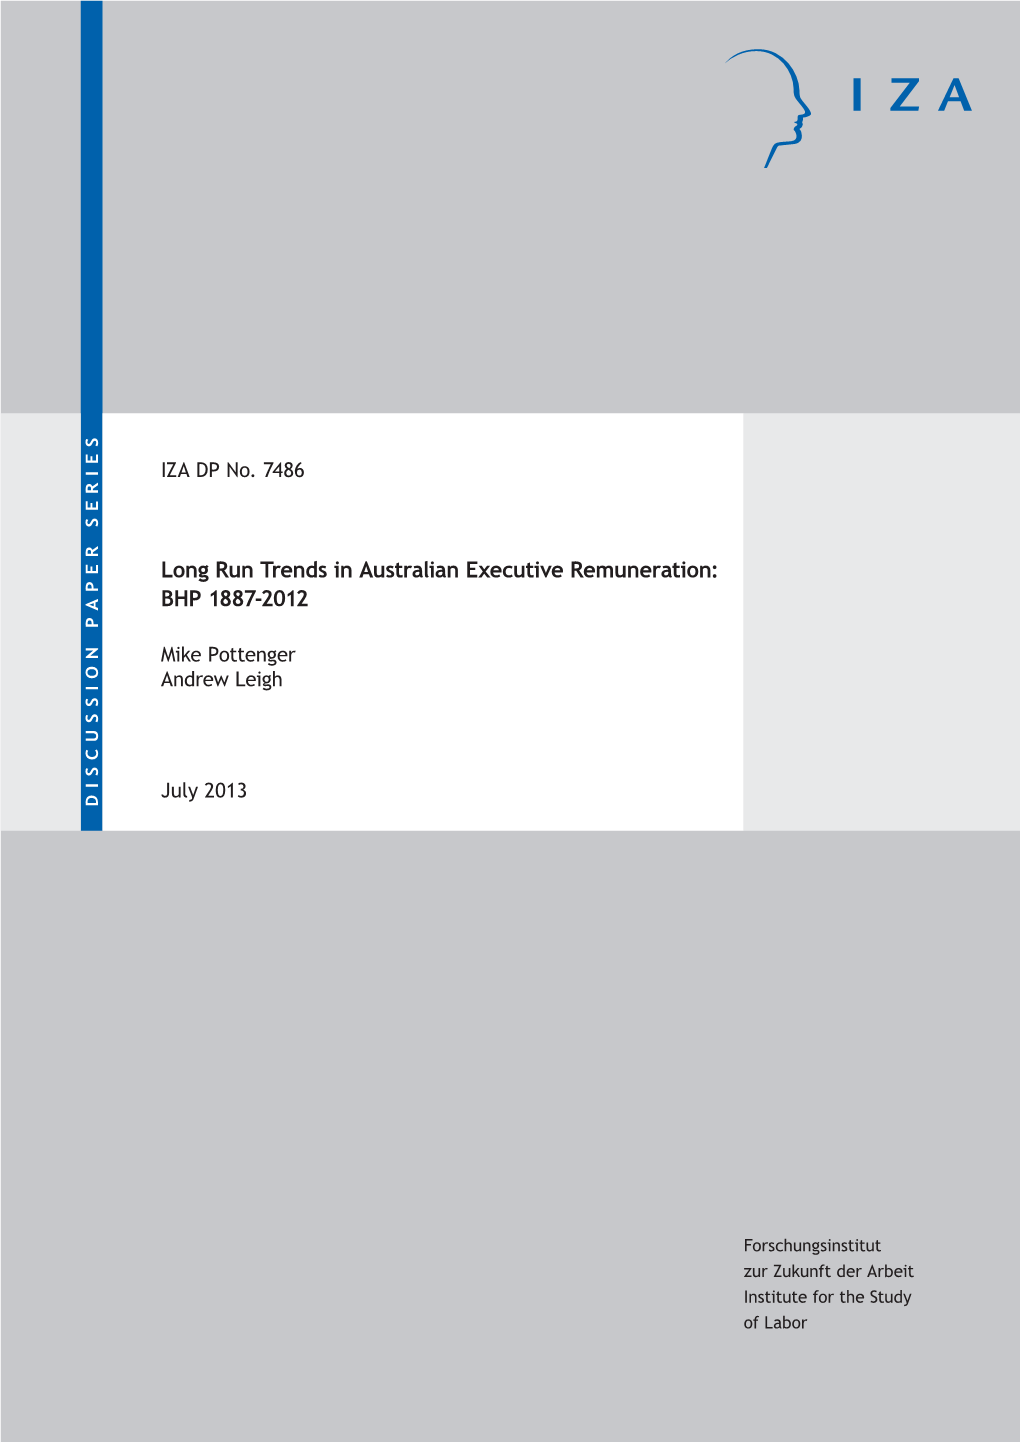 Long Run Trends in Australian Executive Remuneration: BHP 1887-2012